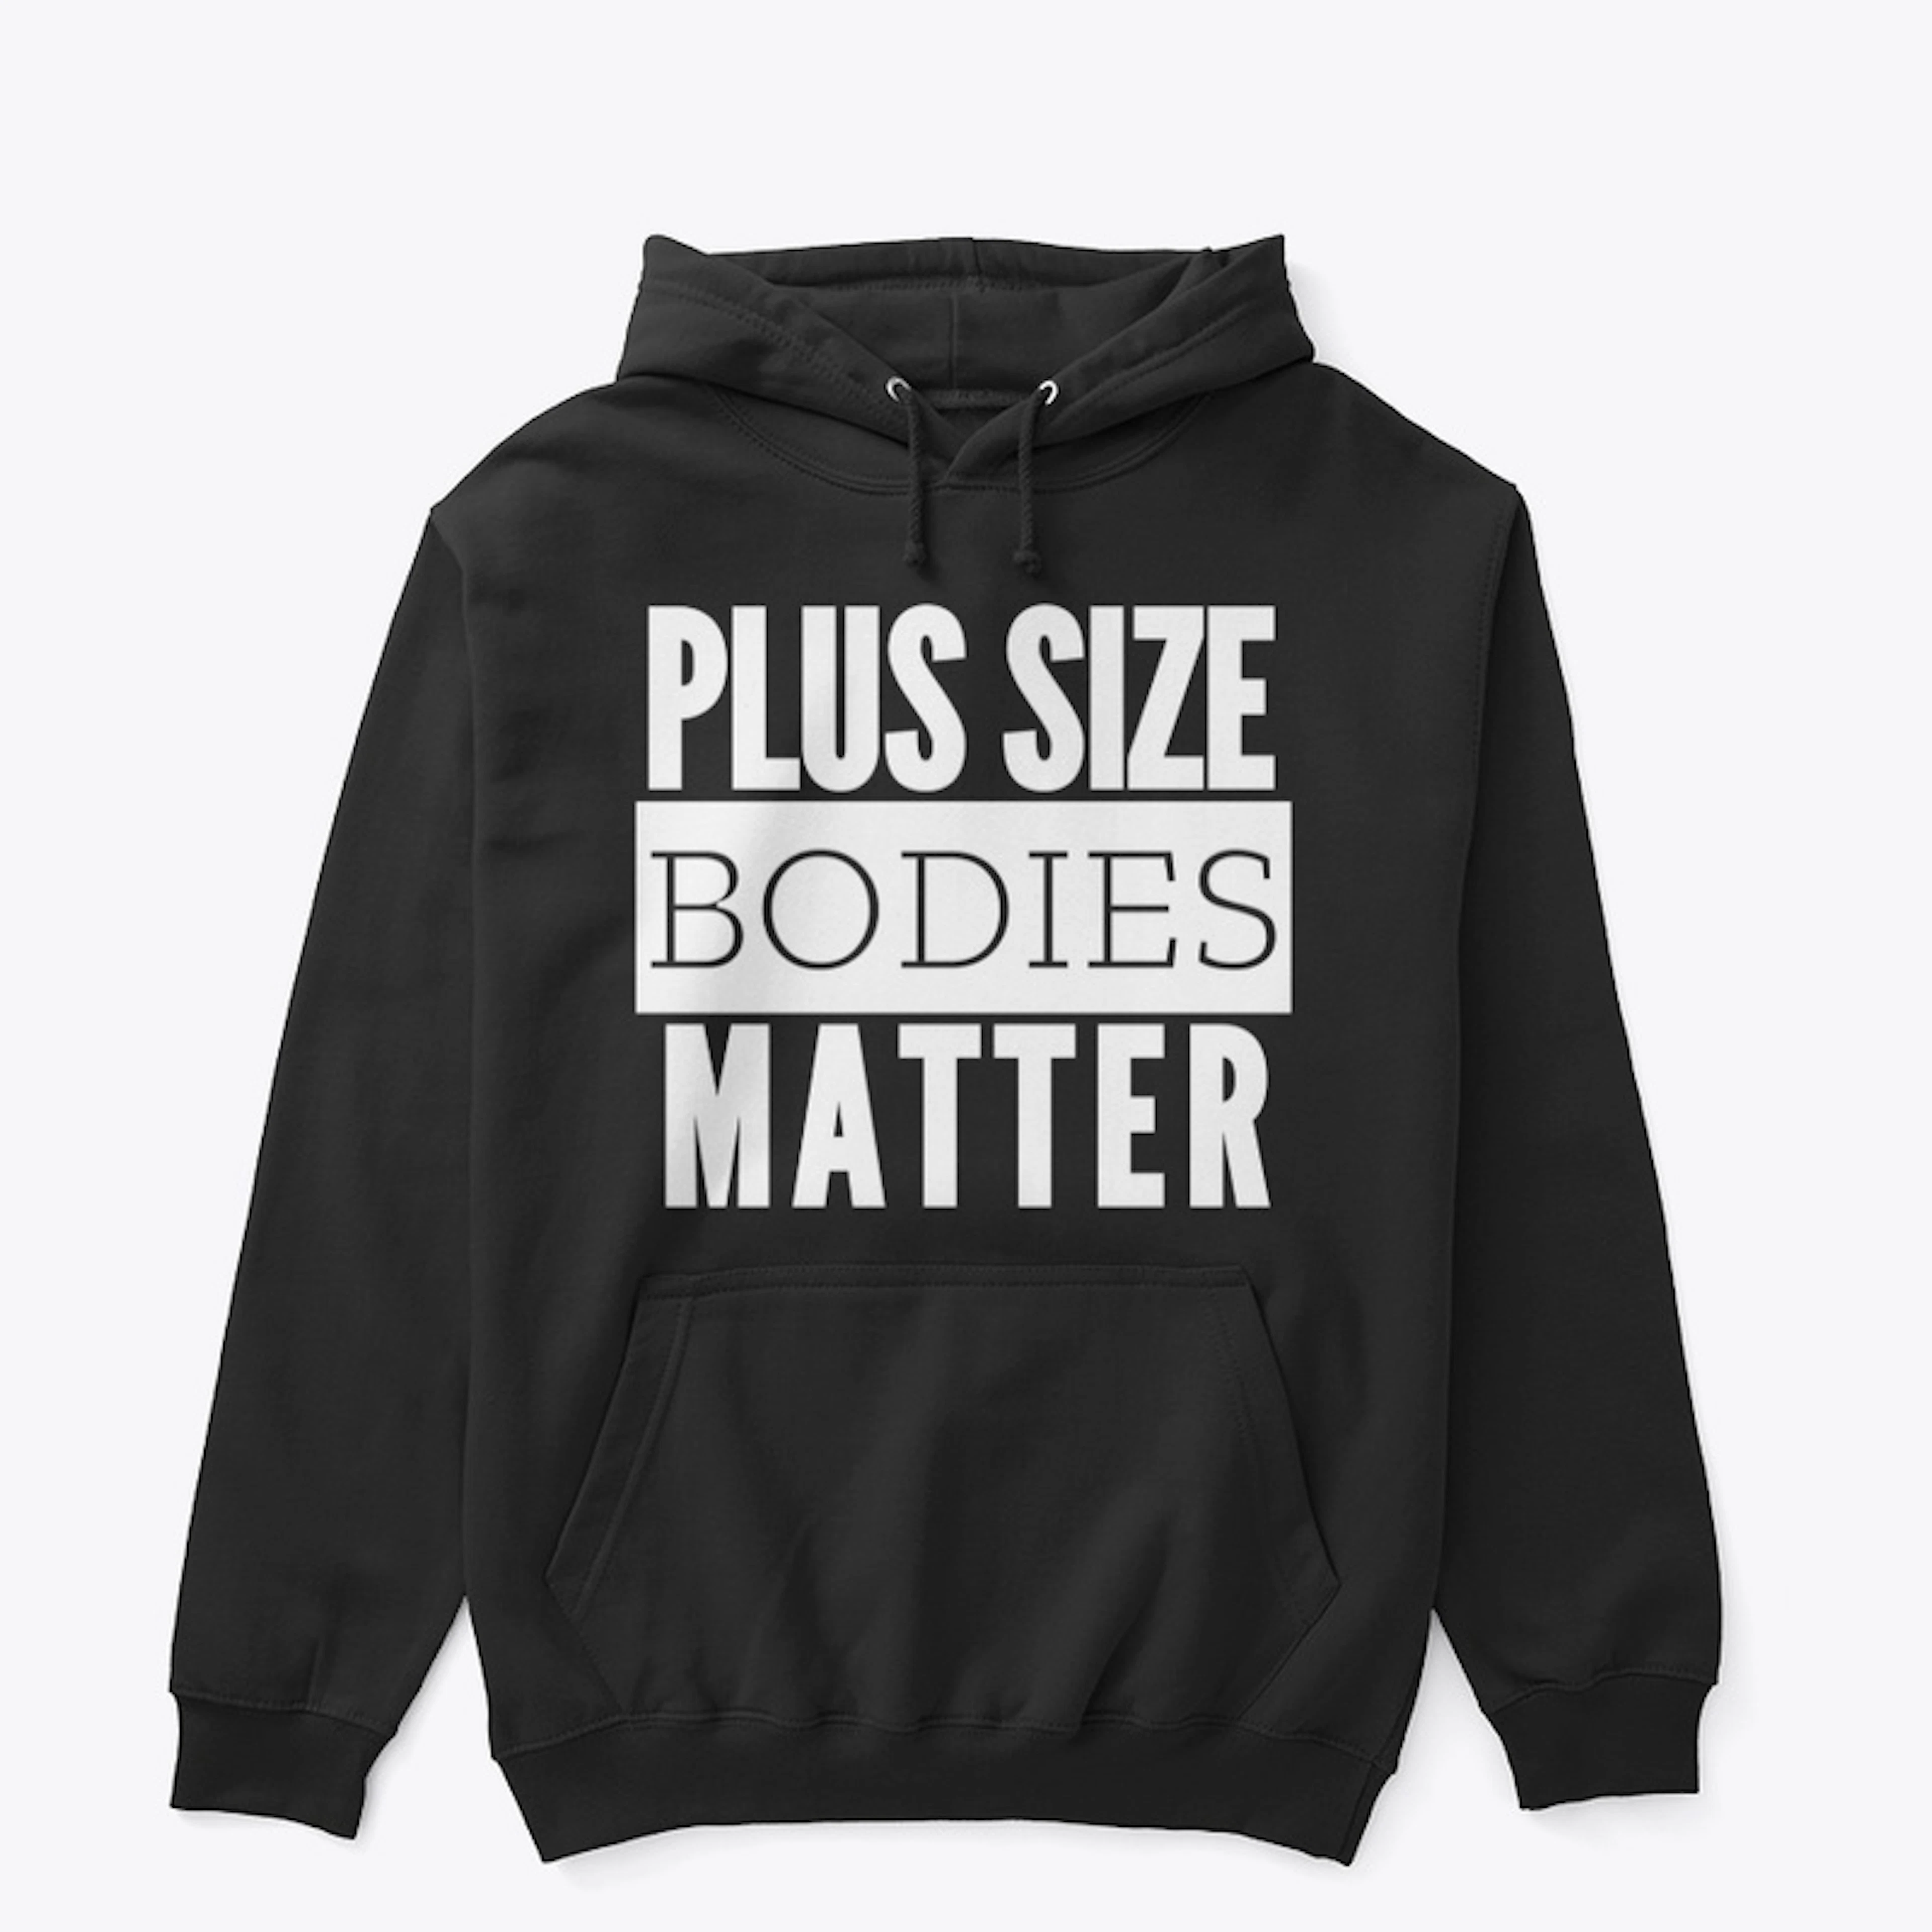 Plus Size Bodies Matter